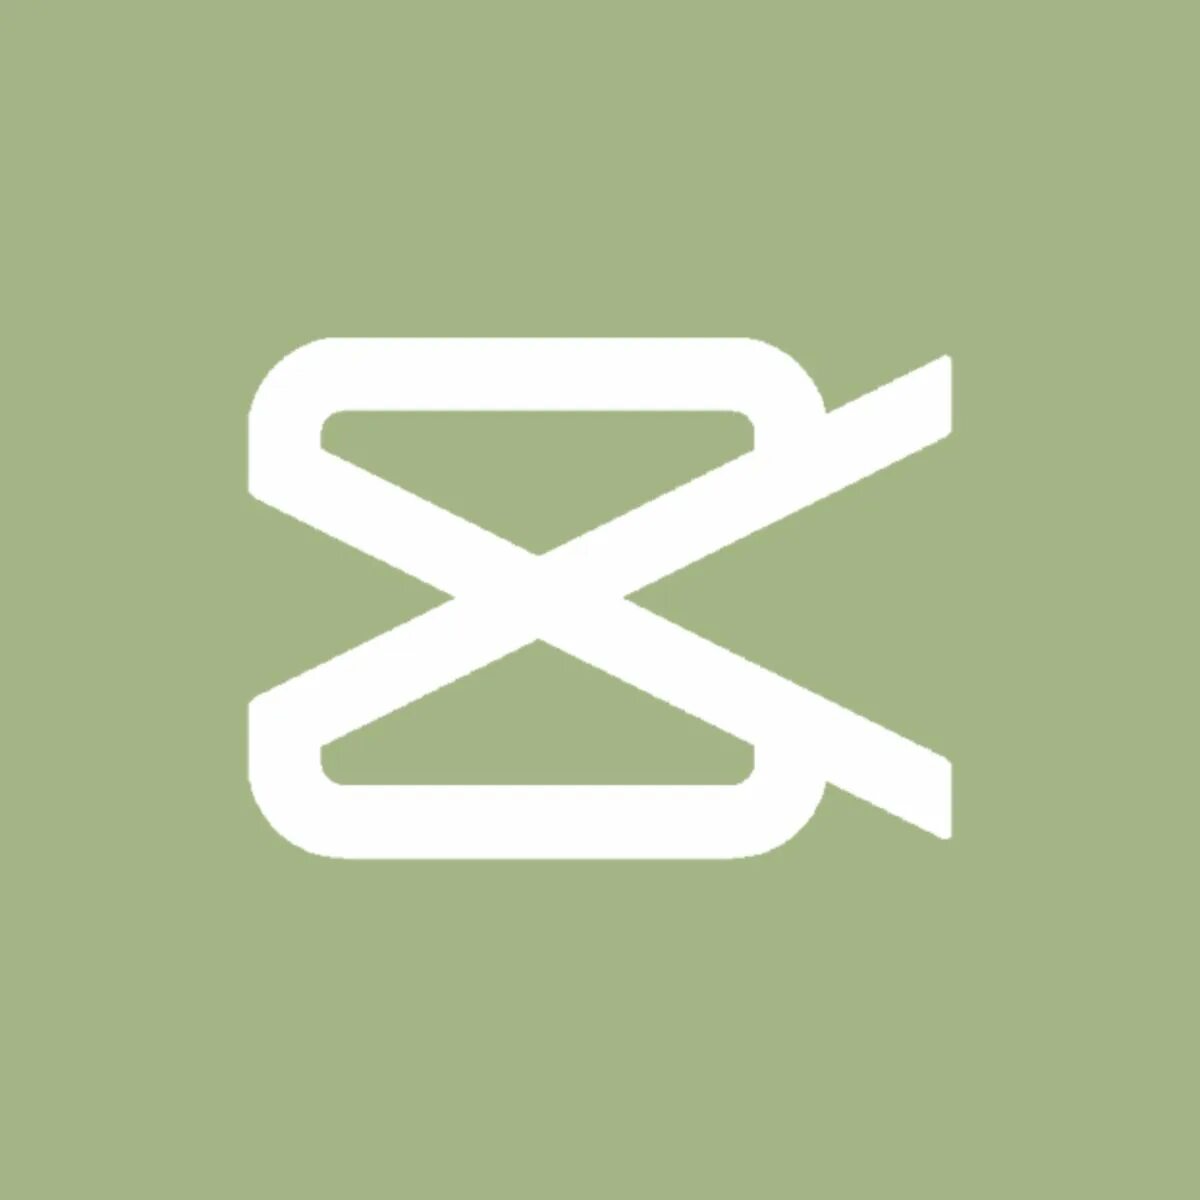 Capcut temple. Иконка приложения CAPCUT. Значки Эстетика. CAPCUT логотип. Эстетичные иконки для приложений.